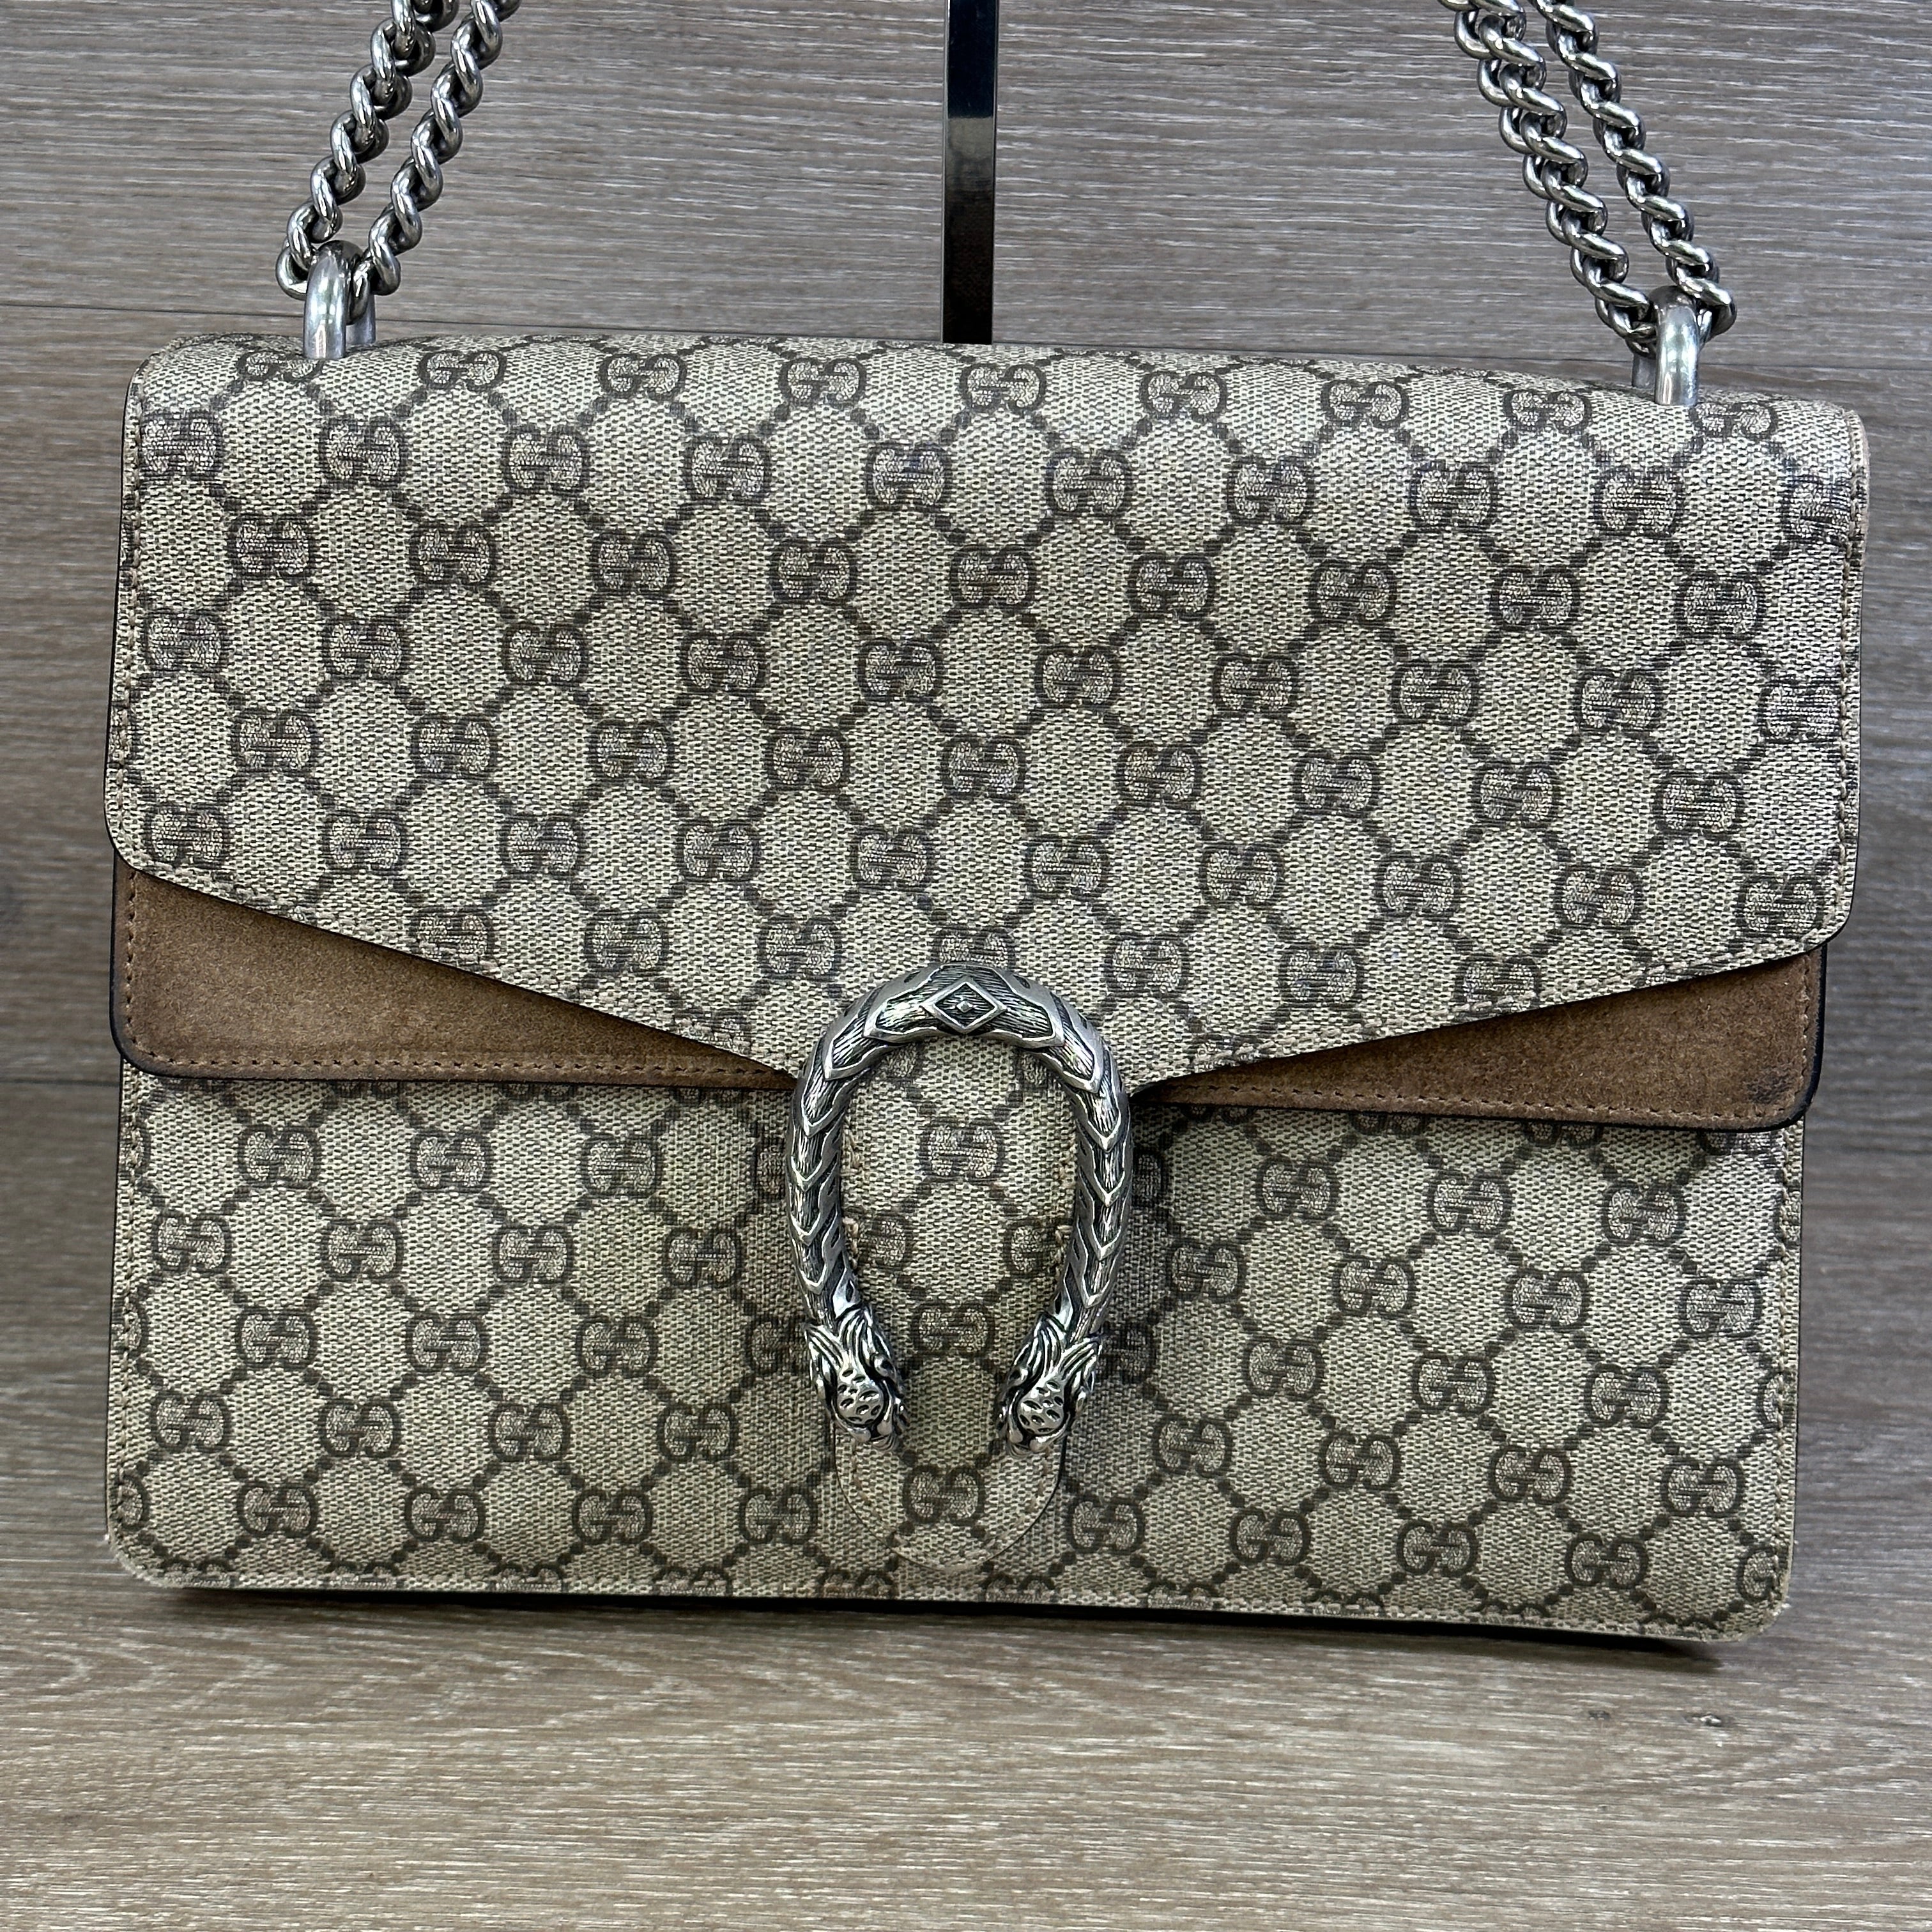 Gucci GG Supreme Monogram Medium Dionysus Shoulder Bag